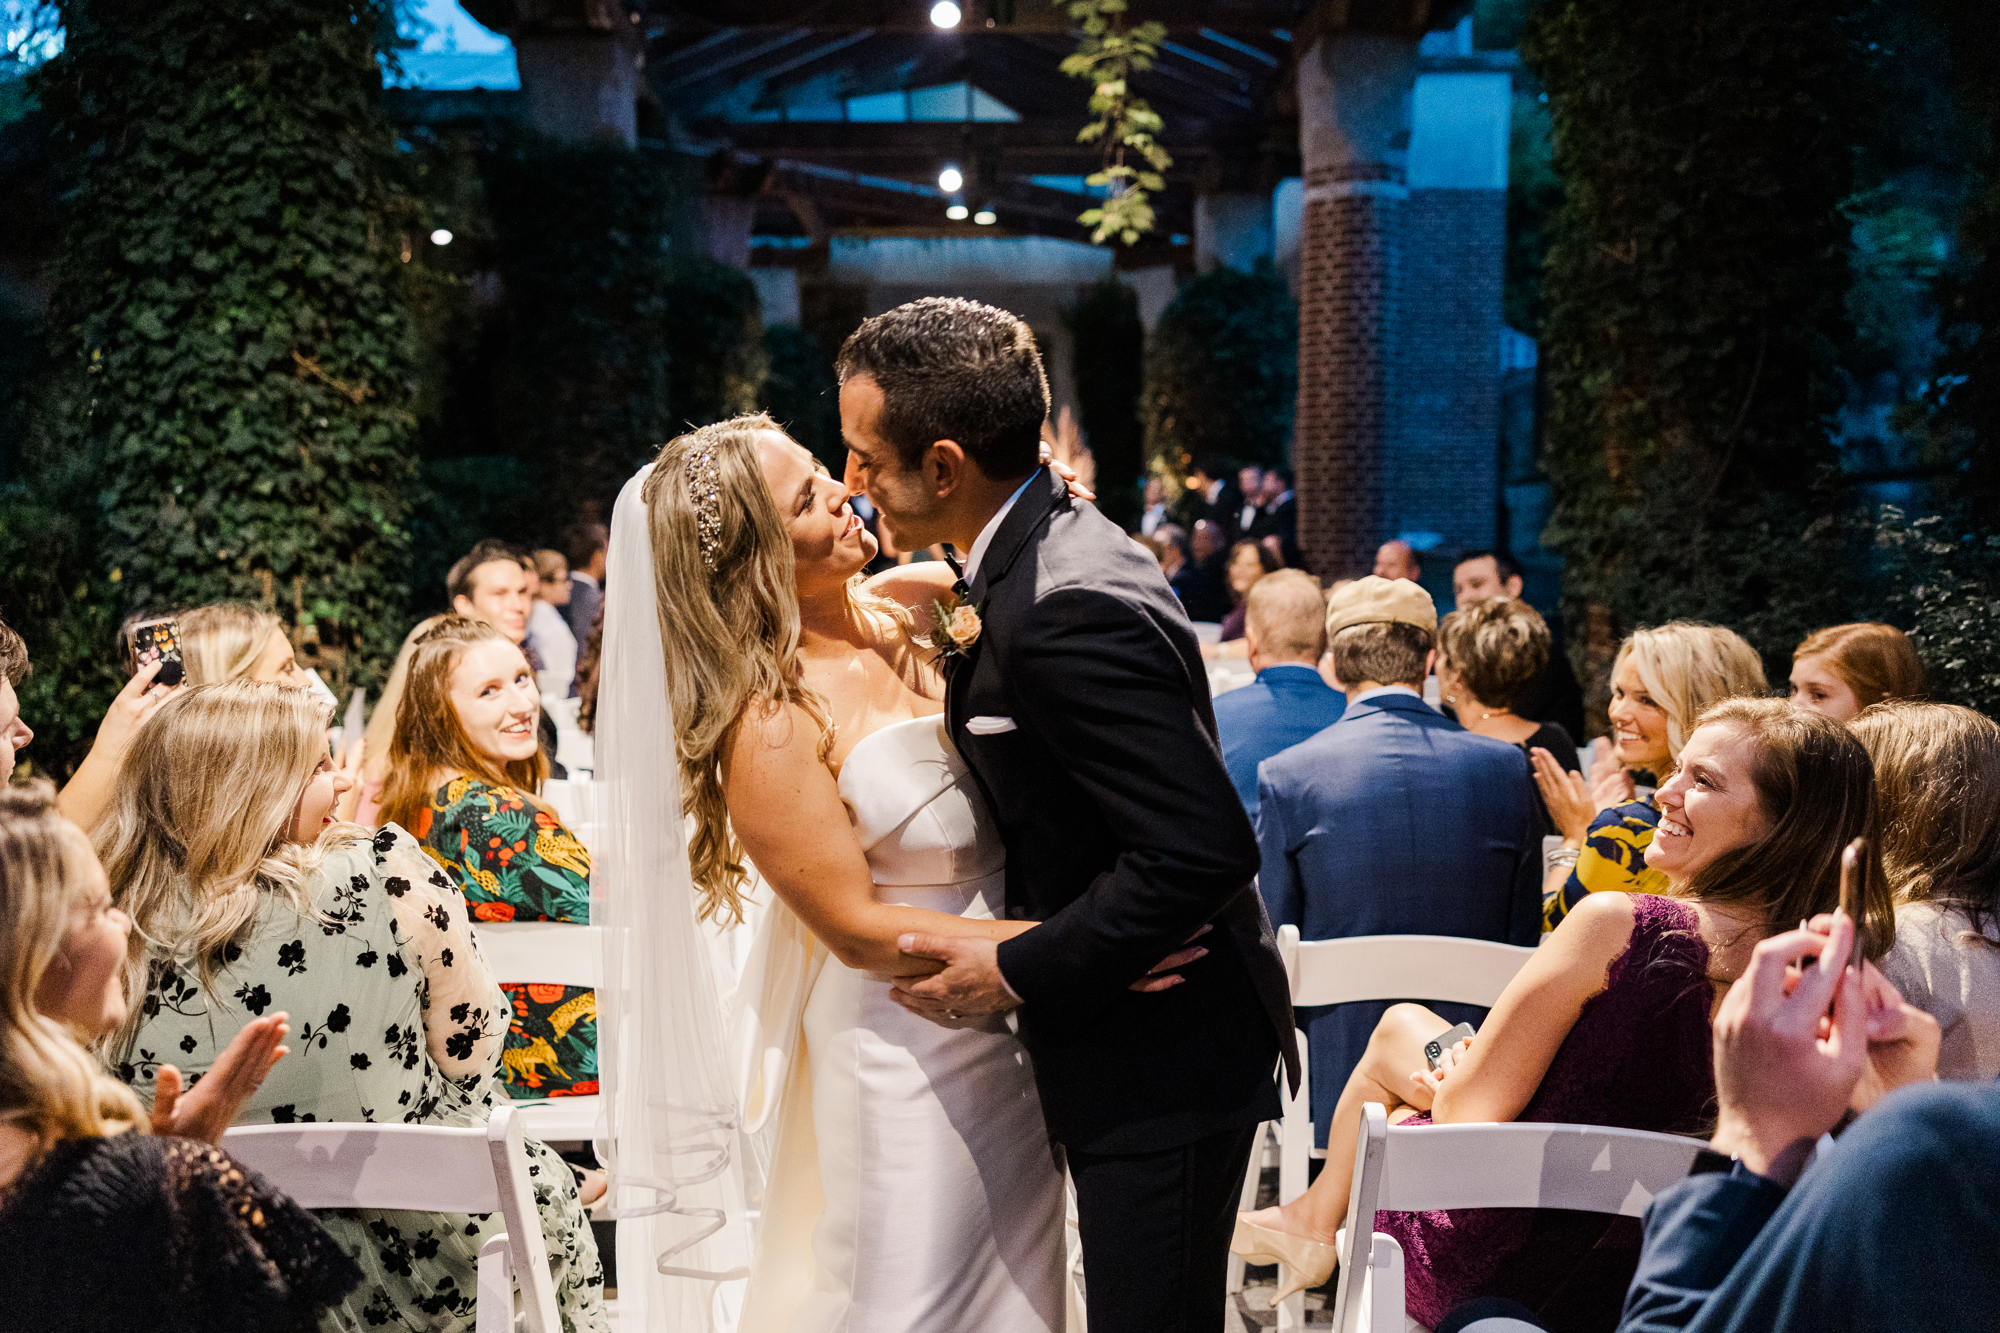 Charming Rainy Wedding Photos at Central Park Zoo